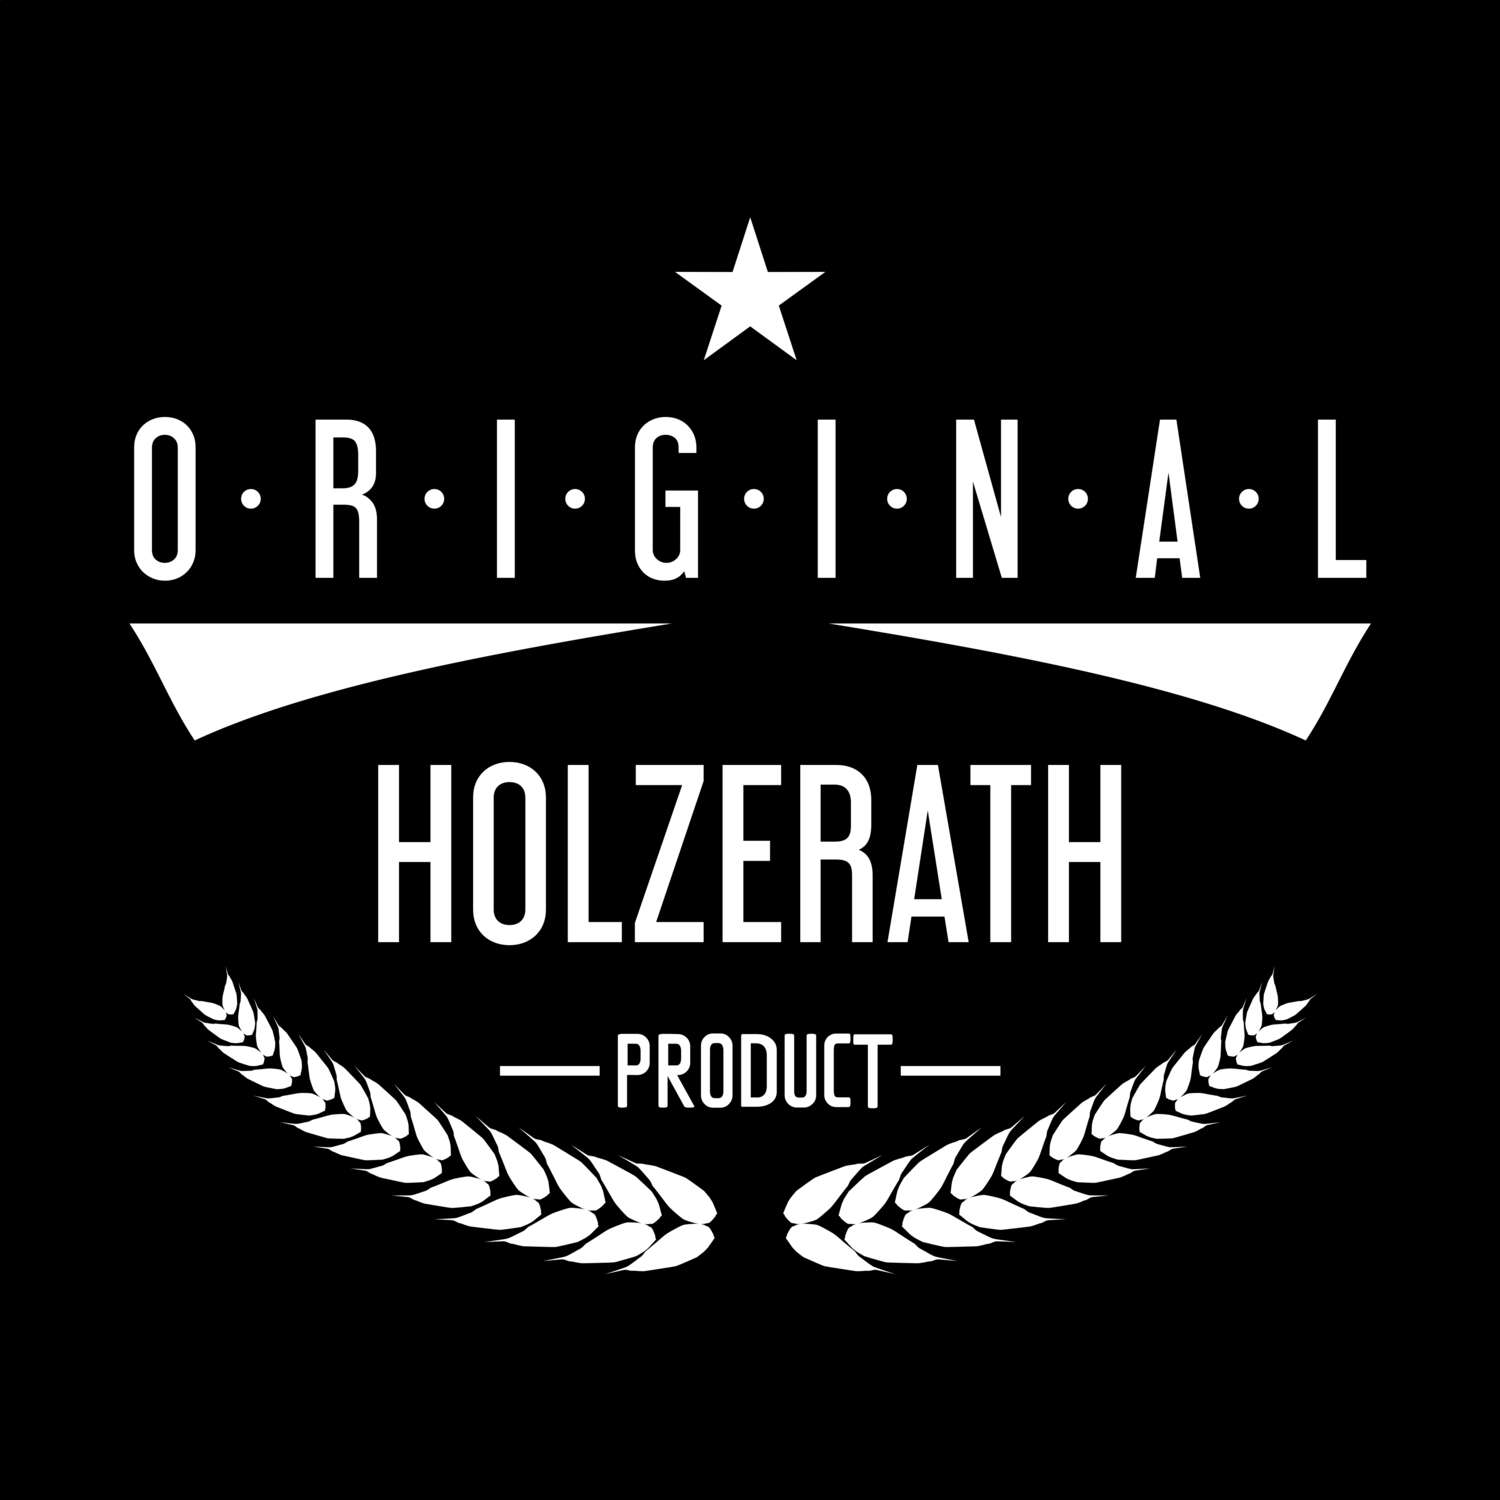 Holzerath T-Shirt »Original Product«